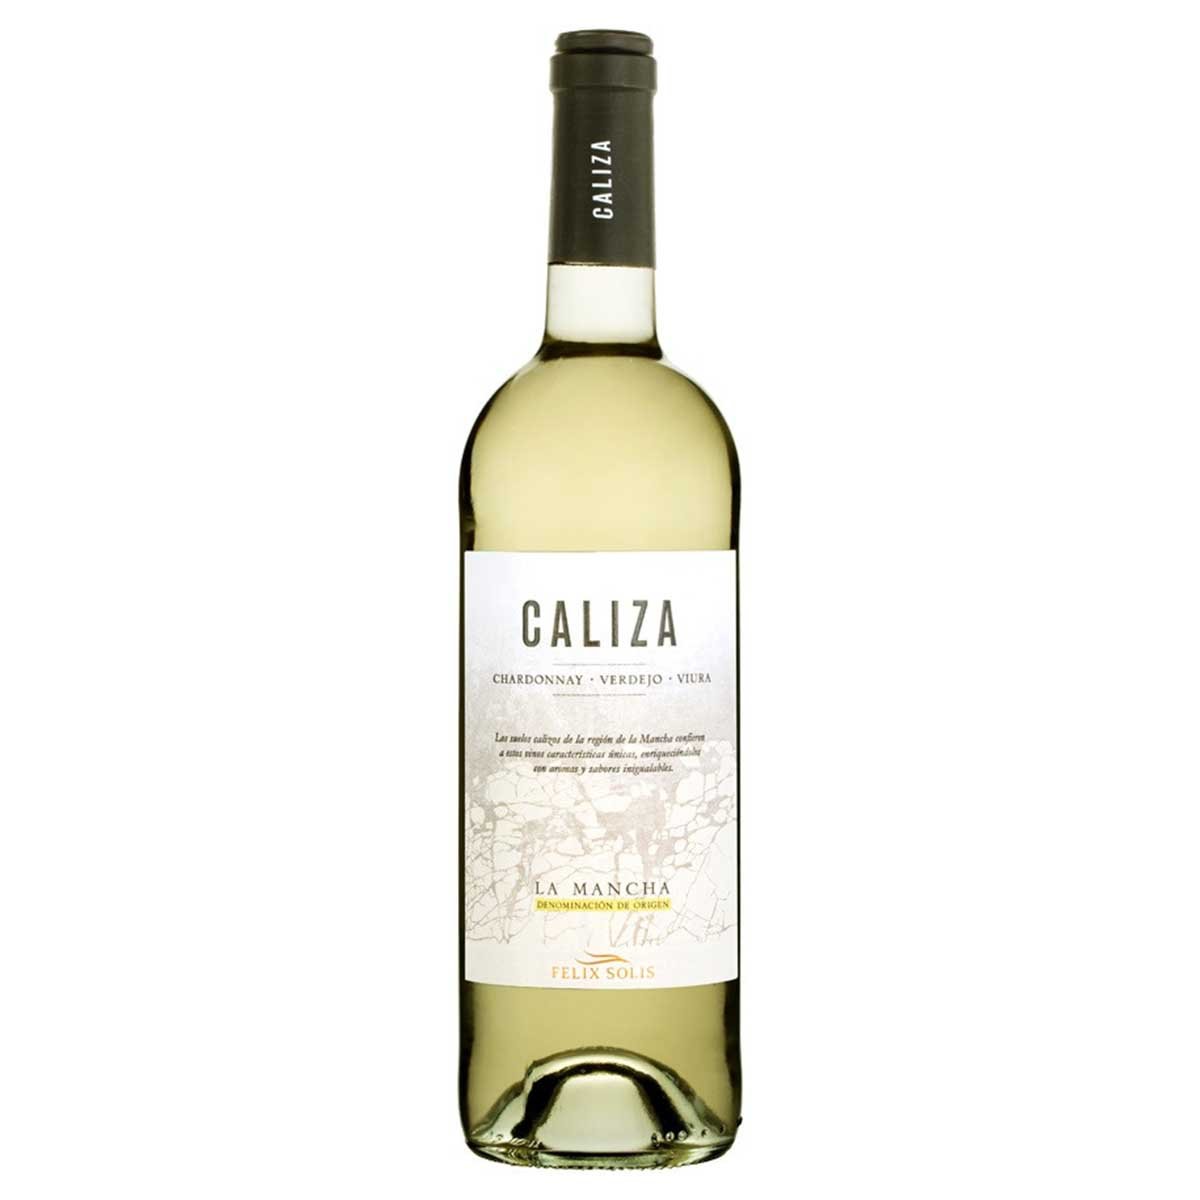 Заказать белое вино. Вино Robert Mondavi, "Napa Valley" fume Blanc 0.75 л. Вино КАЛИСА ла Манча. Вино Beringer Sauvignon fume blan Napa Valley, 0.75 л. Каса Албали Вердехо Совиньон Блан.